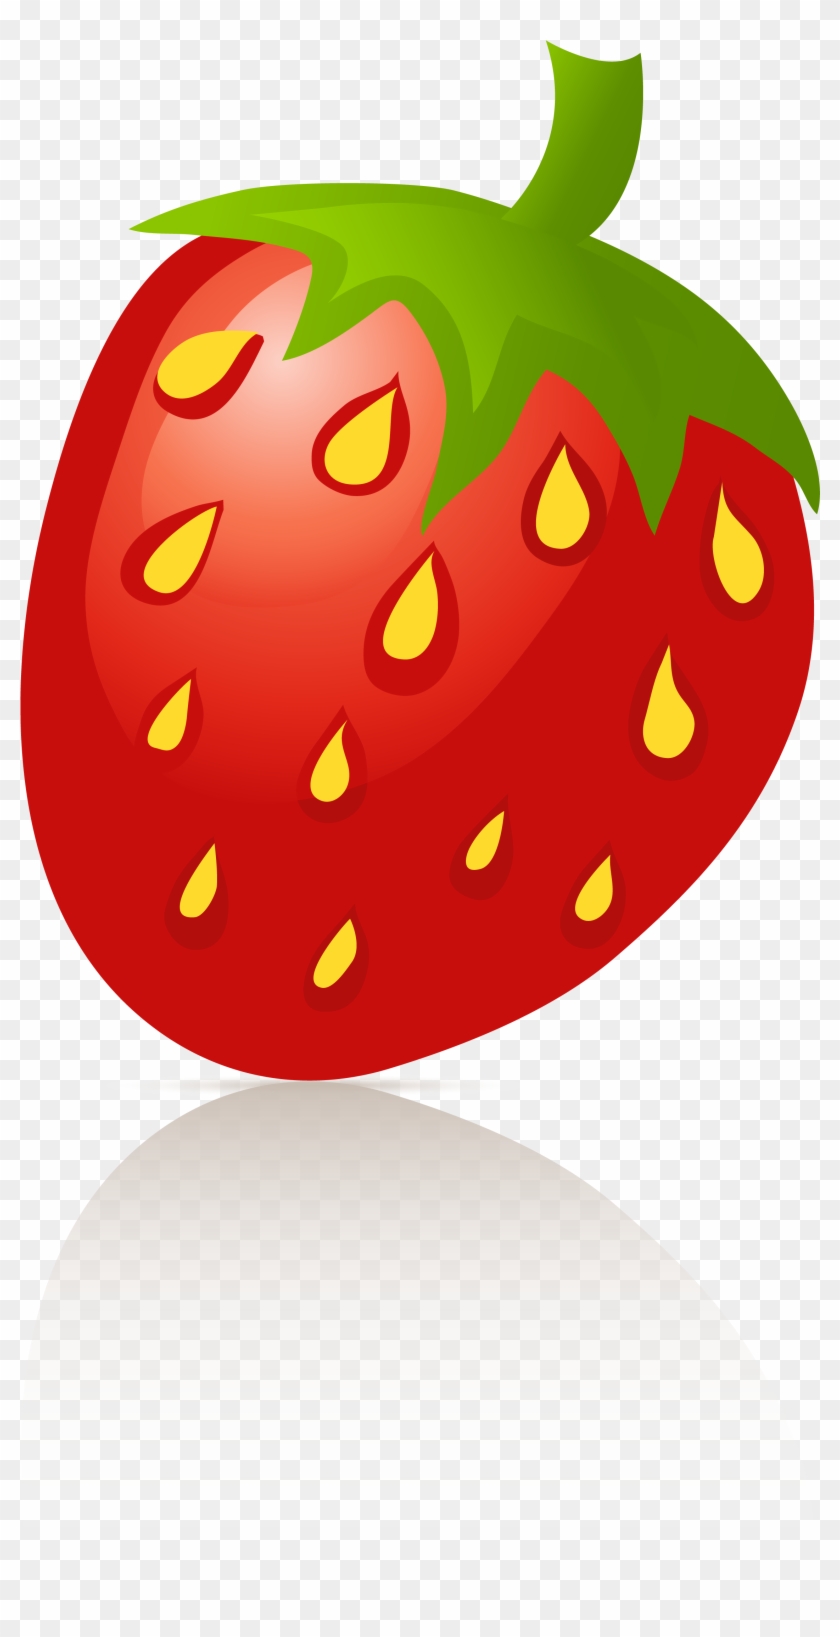 Strawberry Sigel Bell Pepper Clip Art - Strawberry Sigel Bell Pepper Clip Art #321421